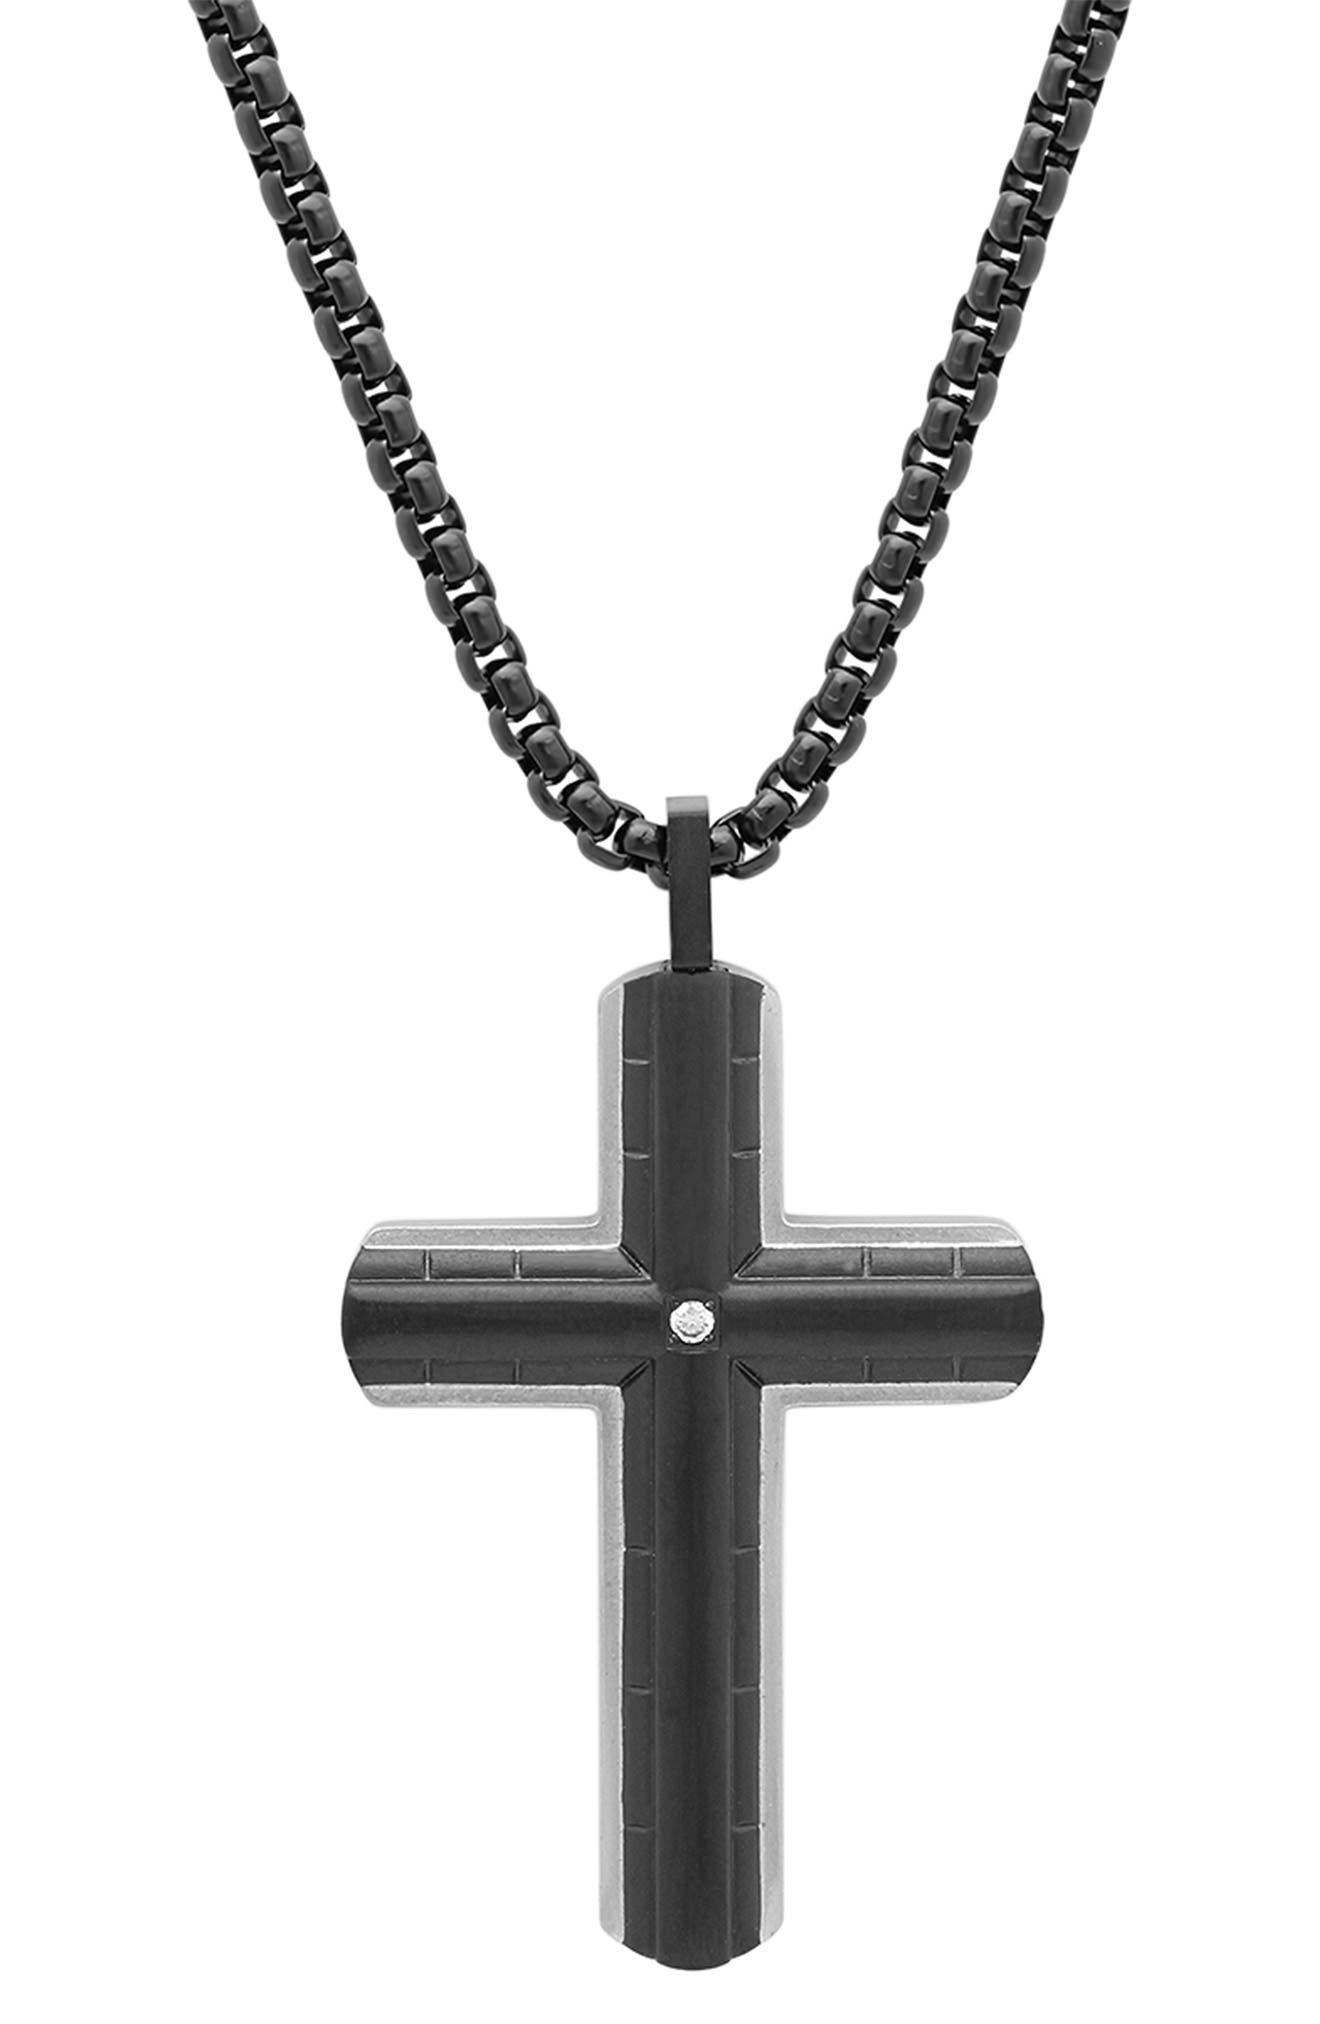 Hmy Jewelry Black Ip Stainless Steel Cross Pendant Necklace